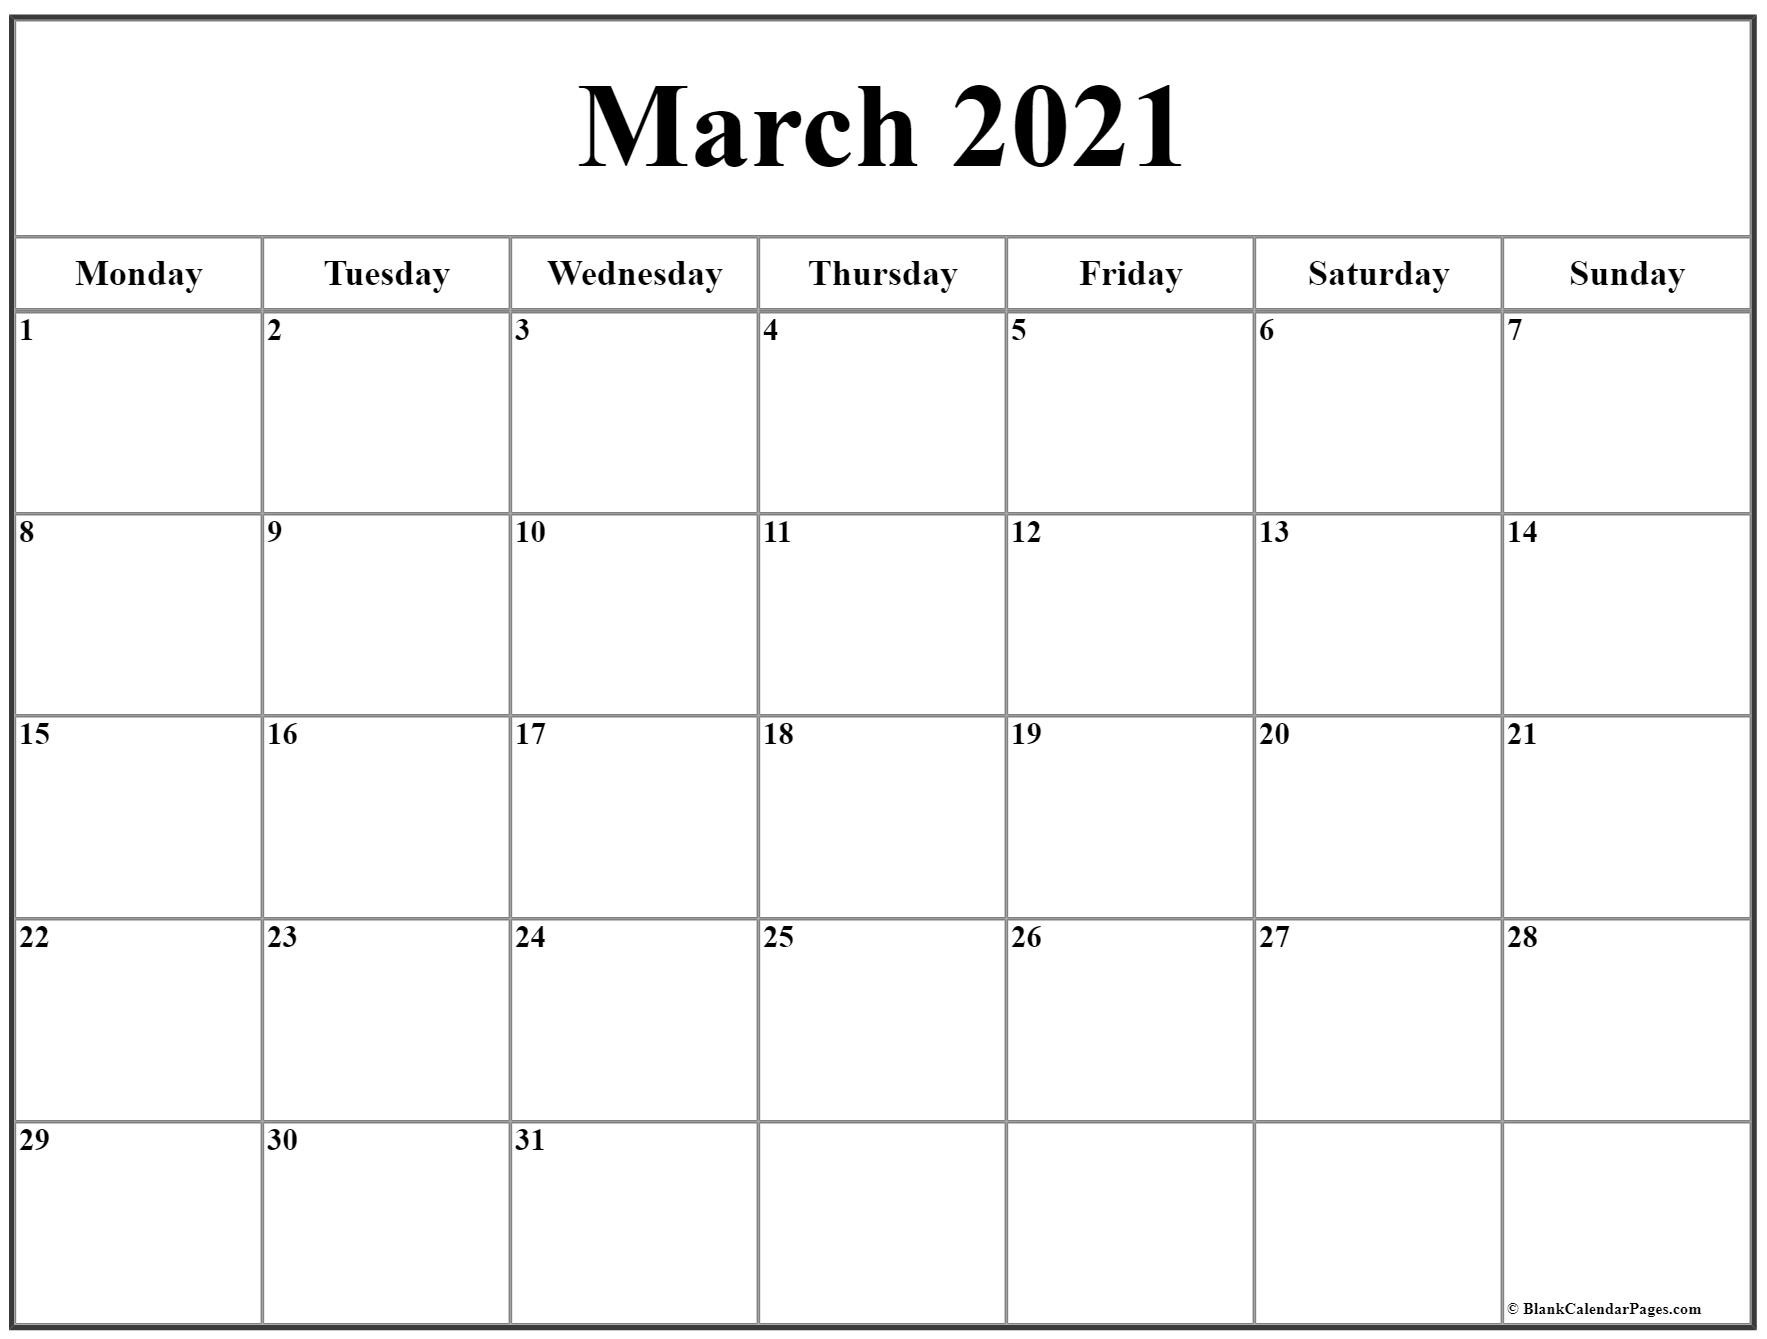 March 2021 Monday Calendar | Monday To Sunday-March 2021 Calendar